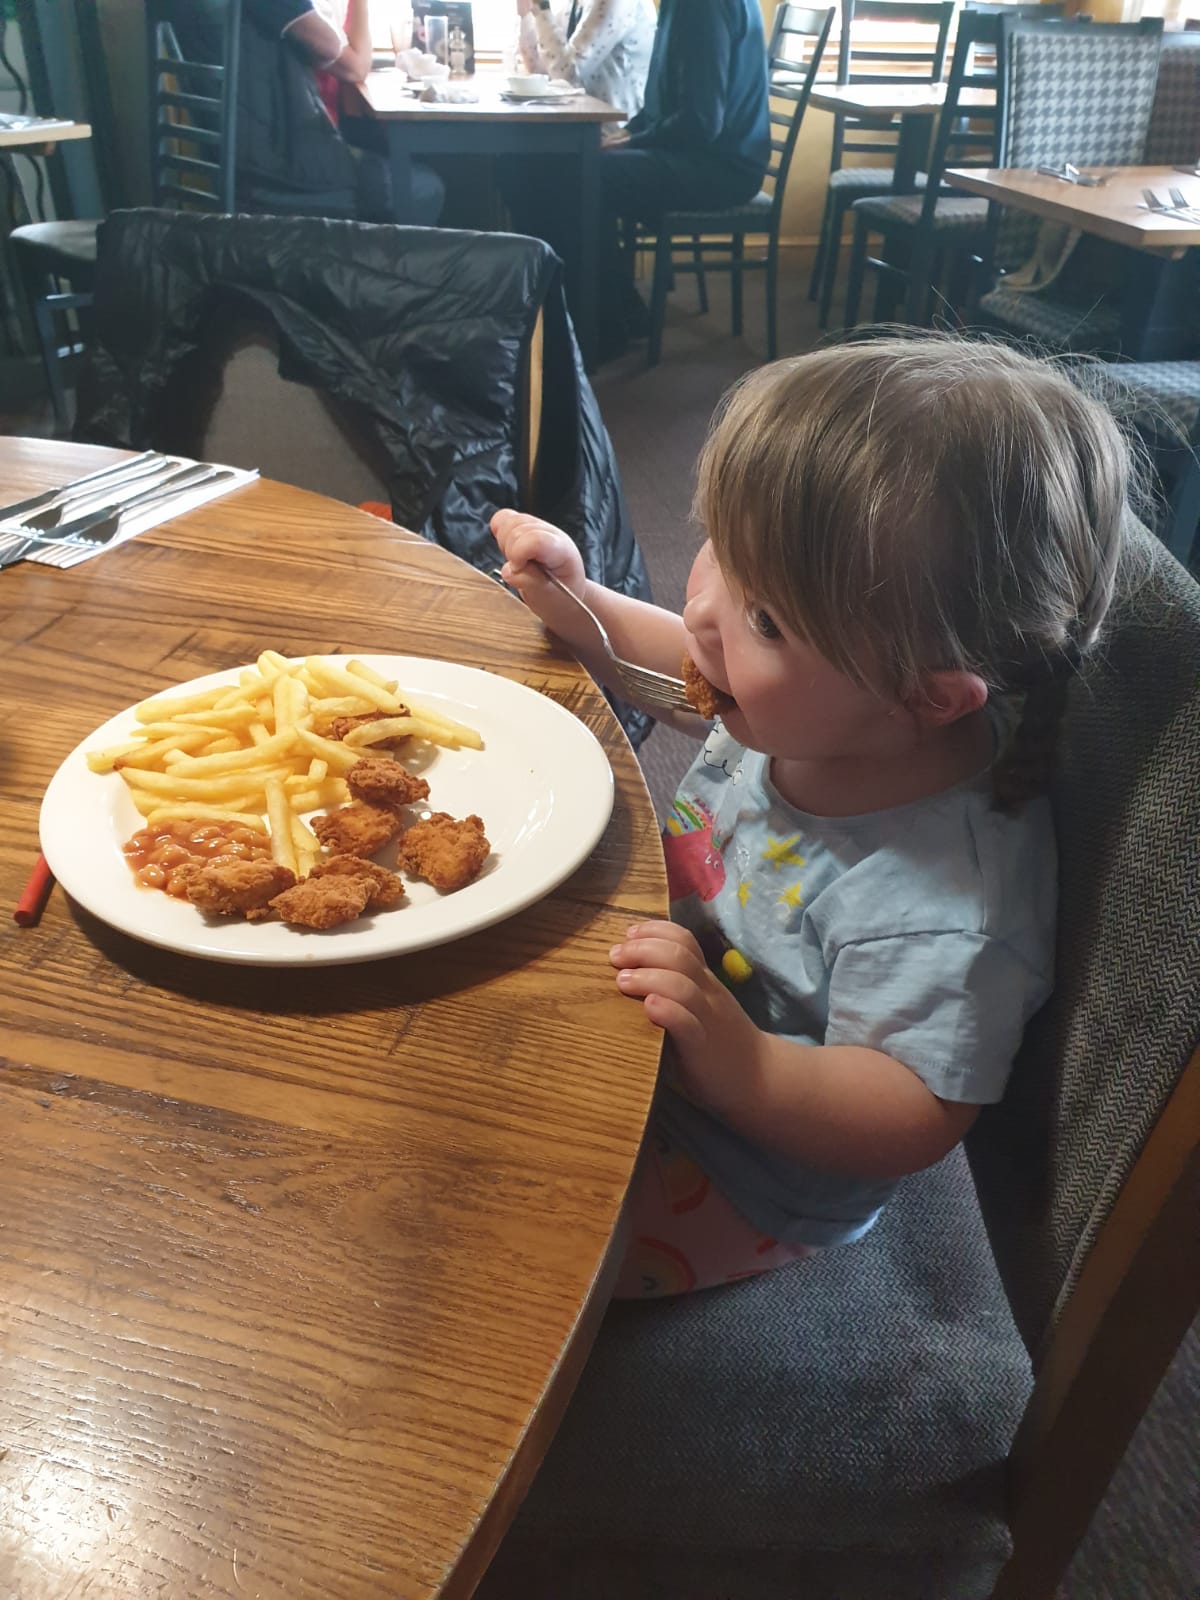 Child eating food at restaurant